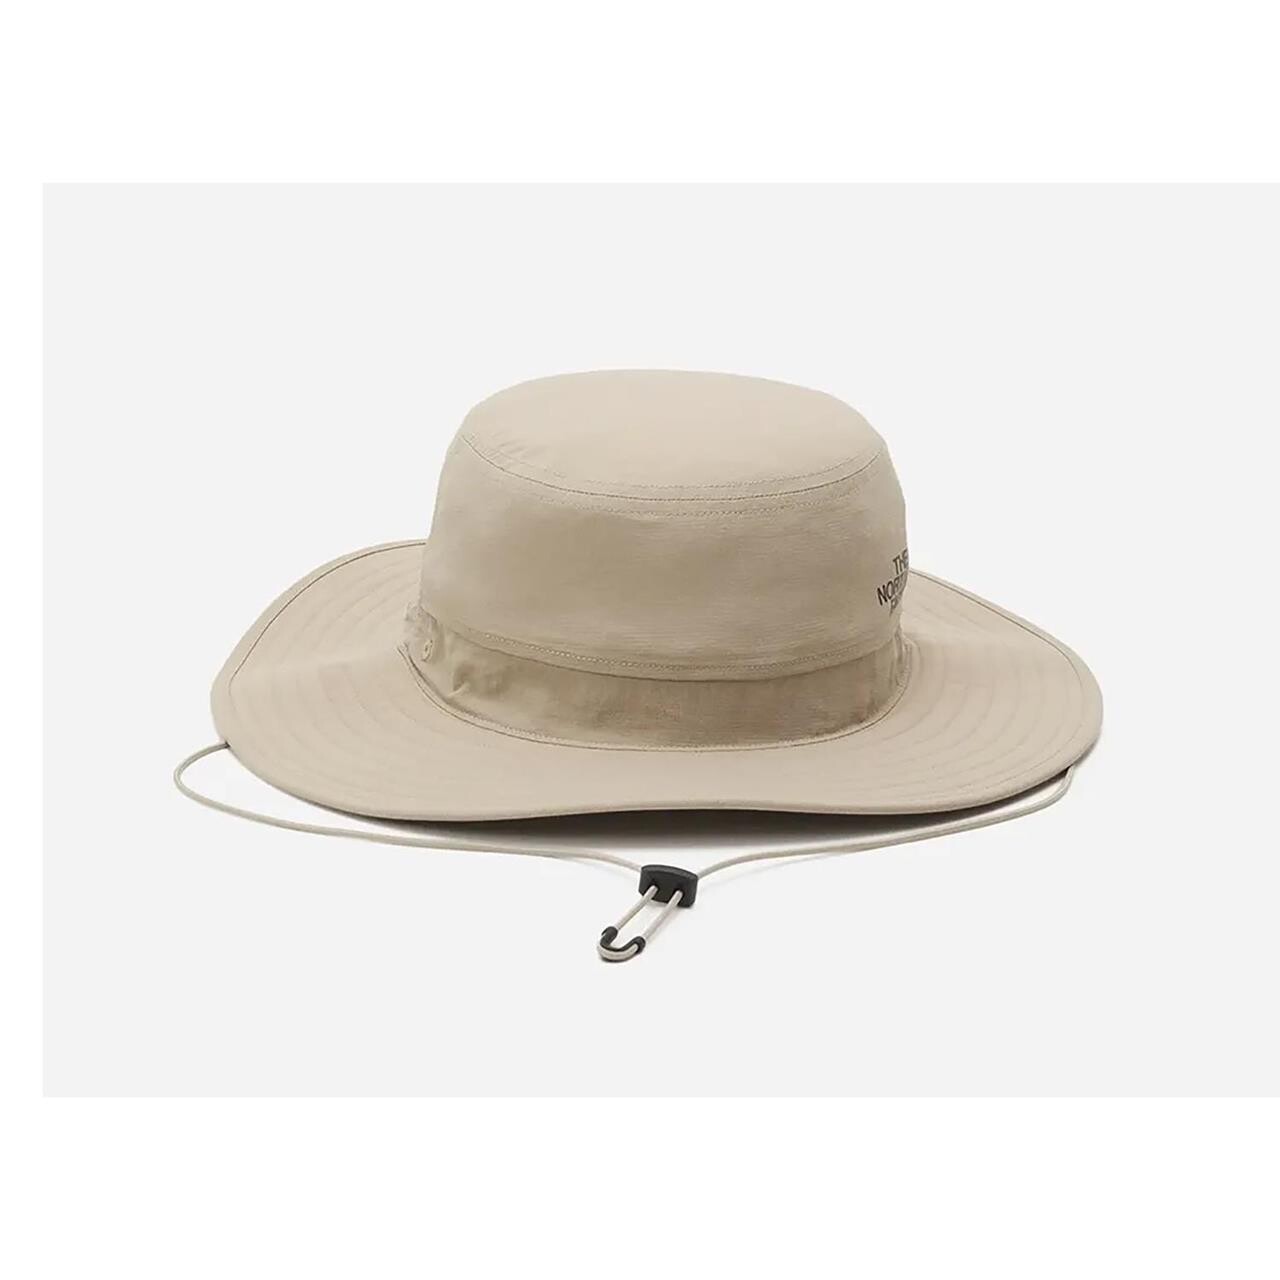 The North Face Horizon Breeze Brimmer Hat (Beige (DUNE BEIGE) Small/medium)